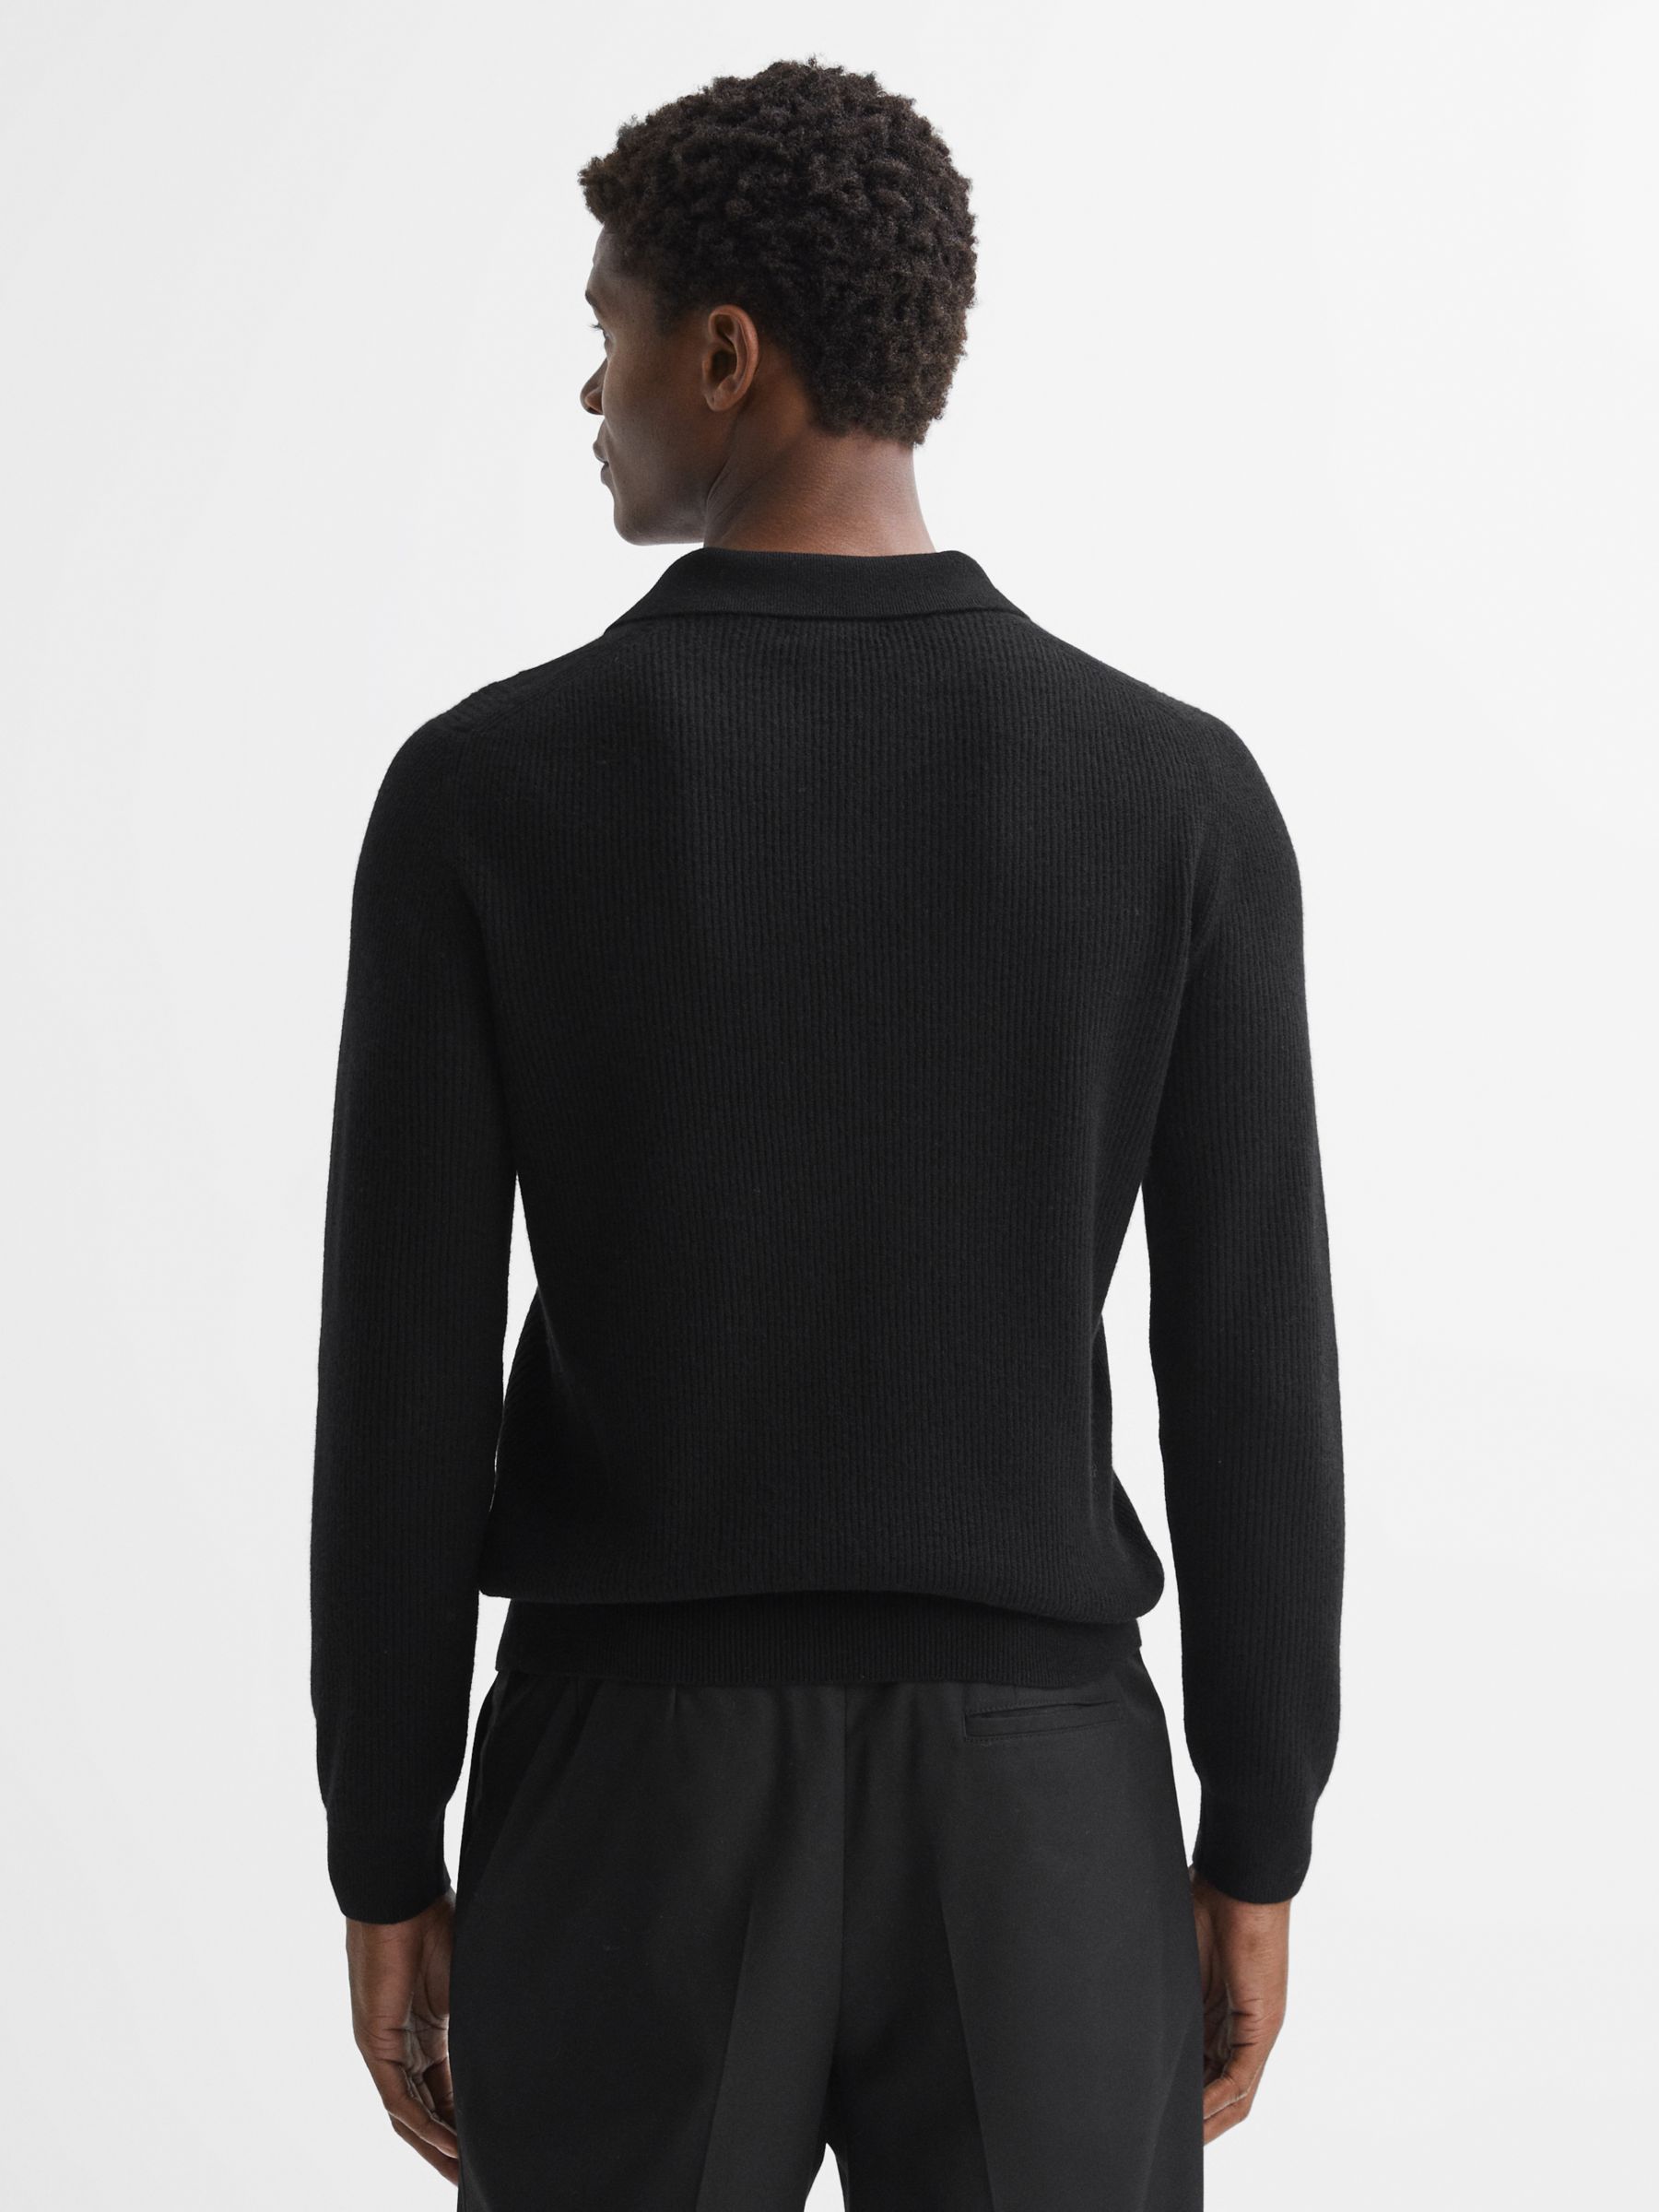 Reiss Malik Long Sleeve Knitted Polo Shirt, Black at John Lewis & Partners